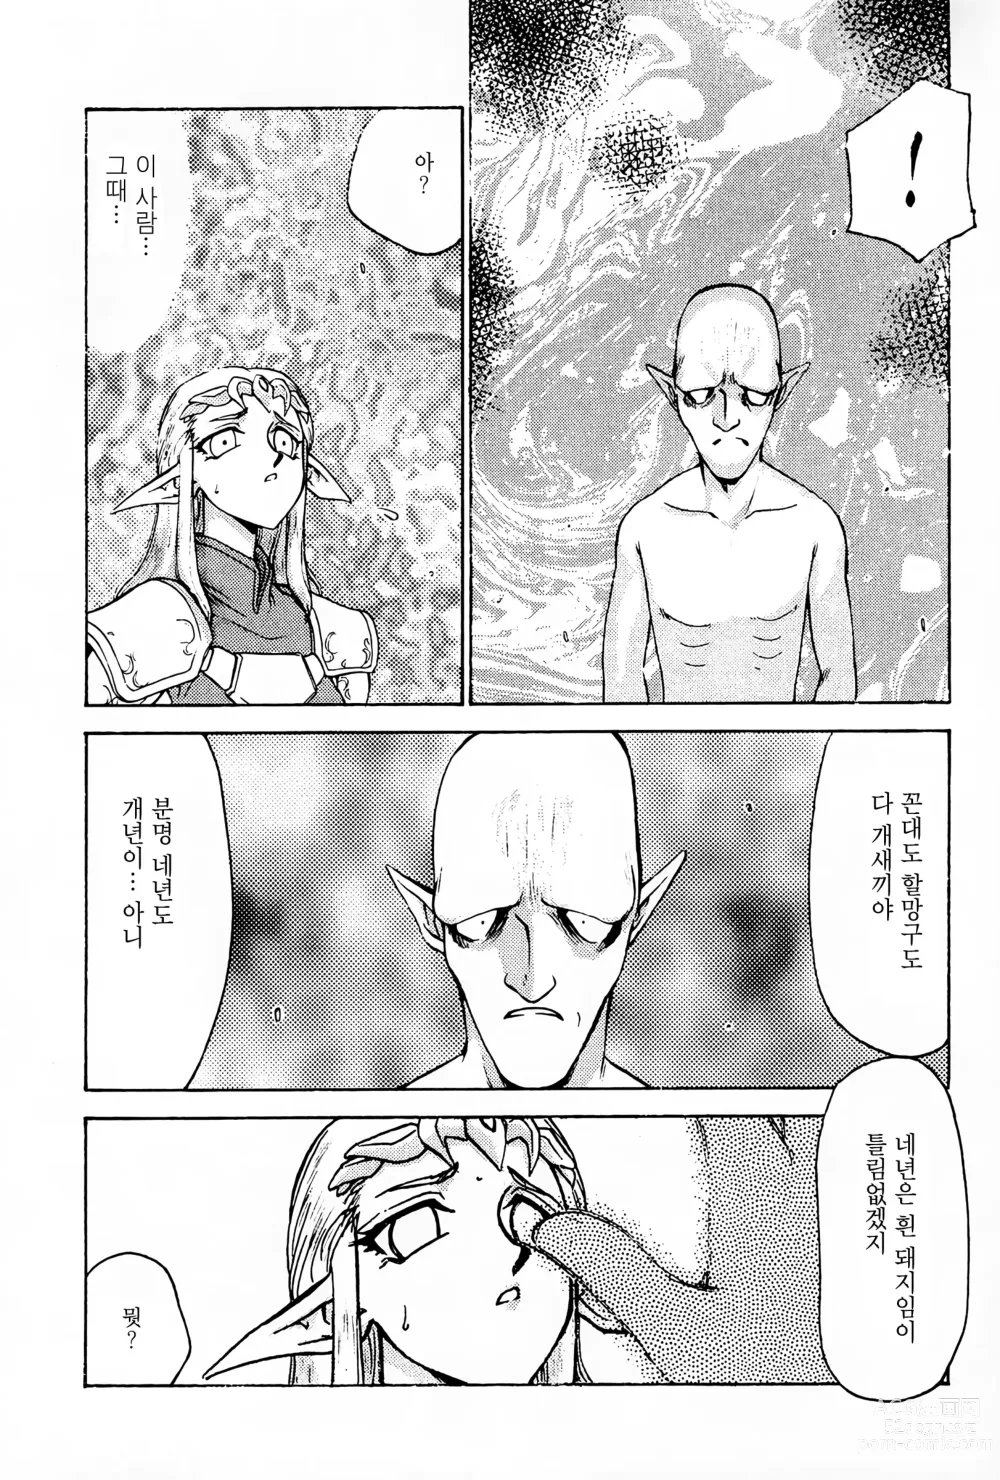 Page 14 of doujinshi NISE Zelda no Densetsu Prologue